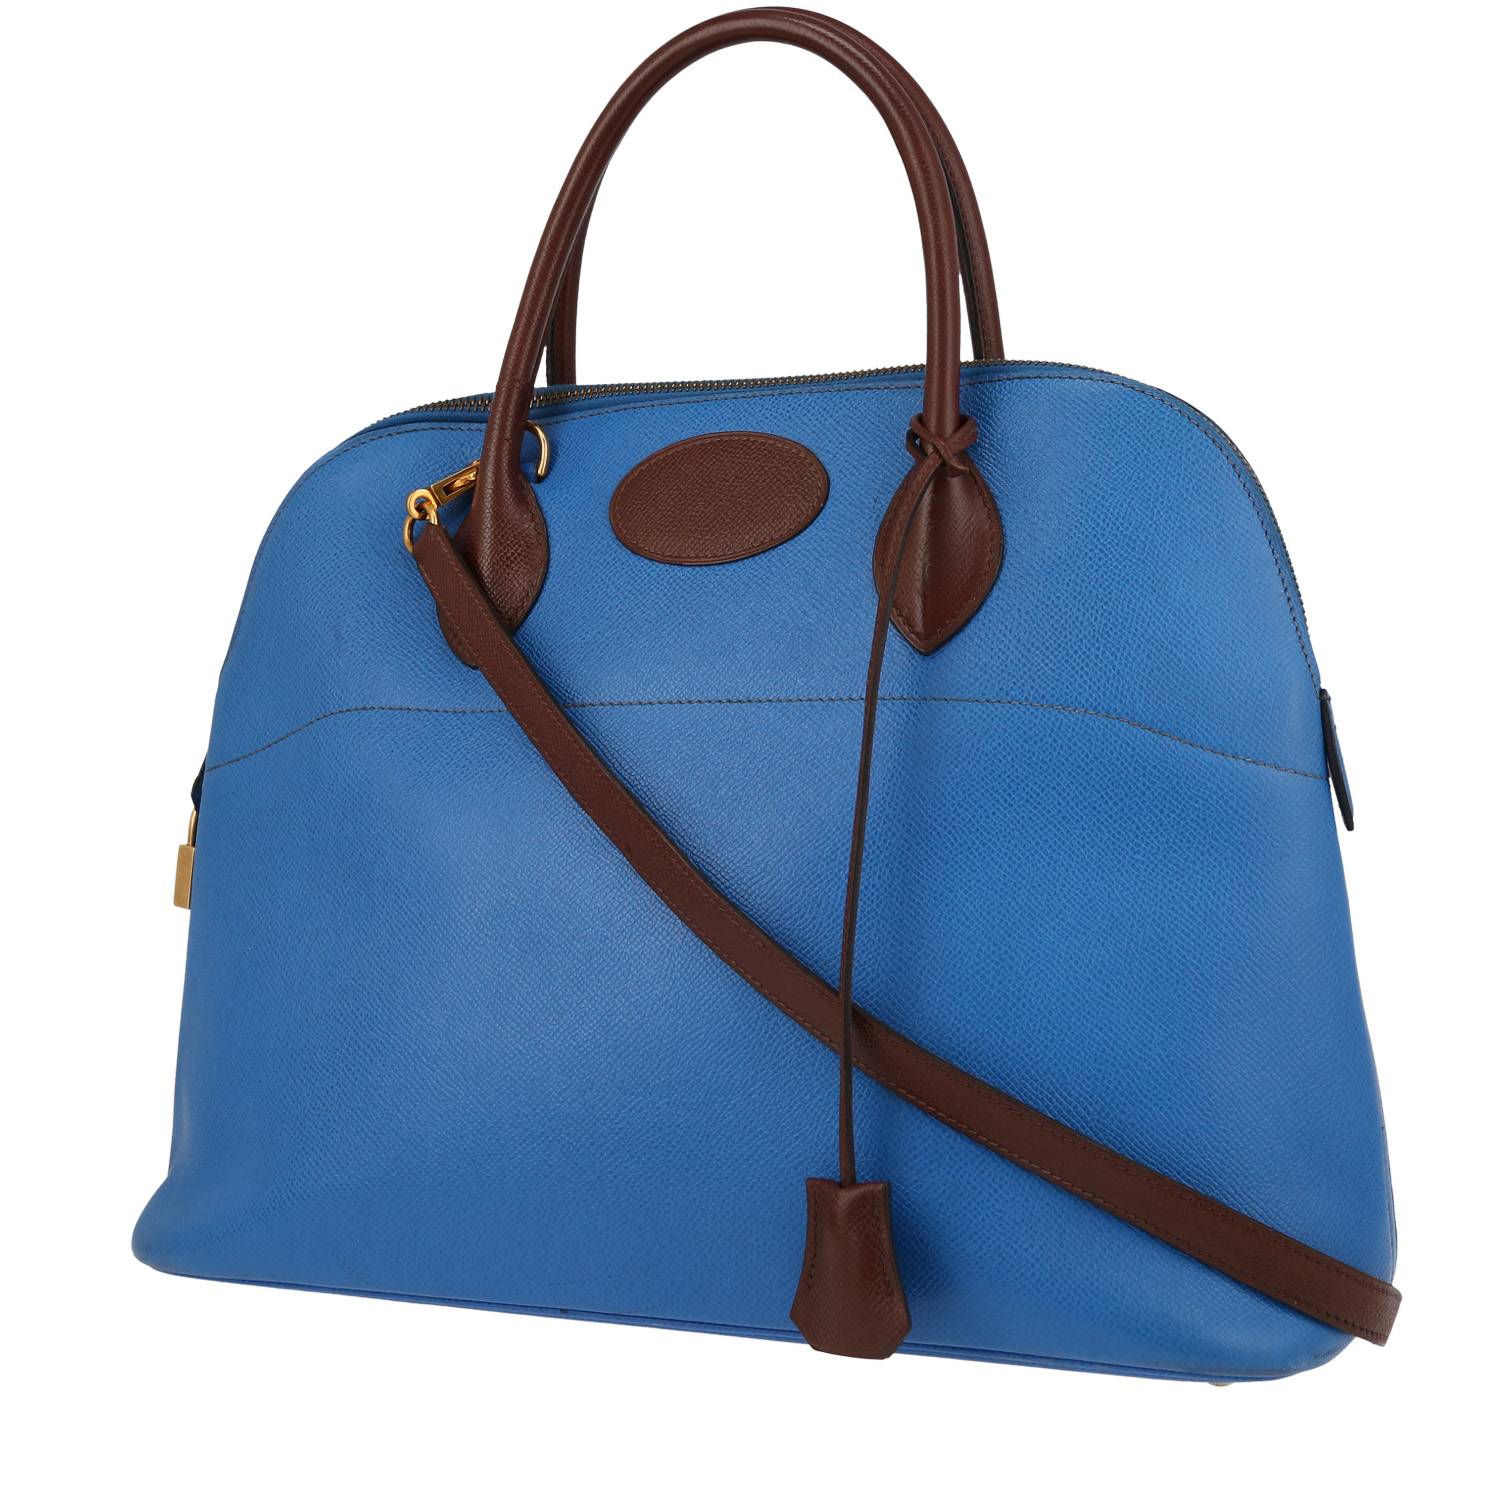 Bonastre Ring Leather Messenger Bag in Brown for Men